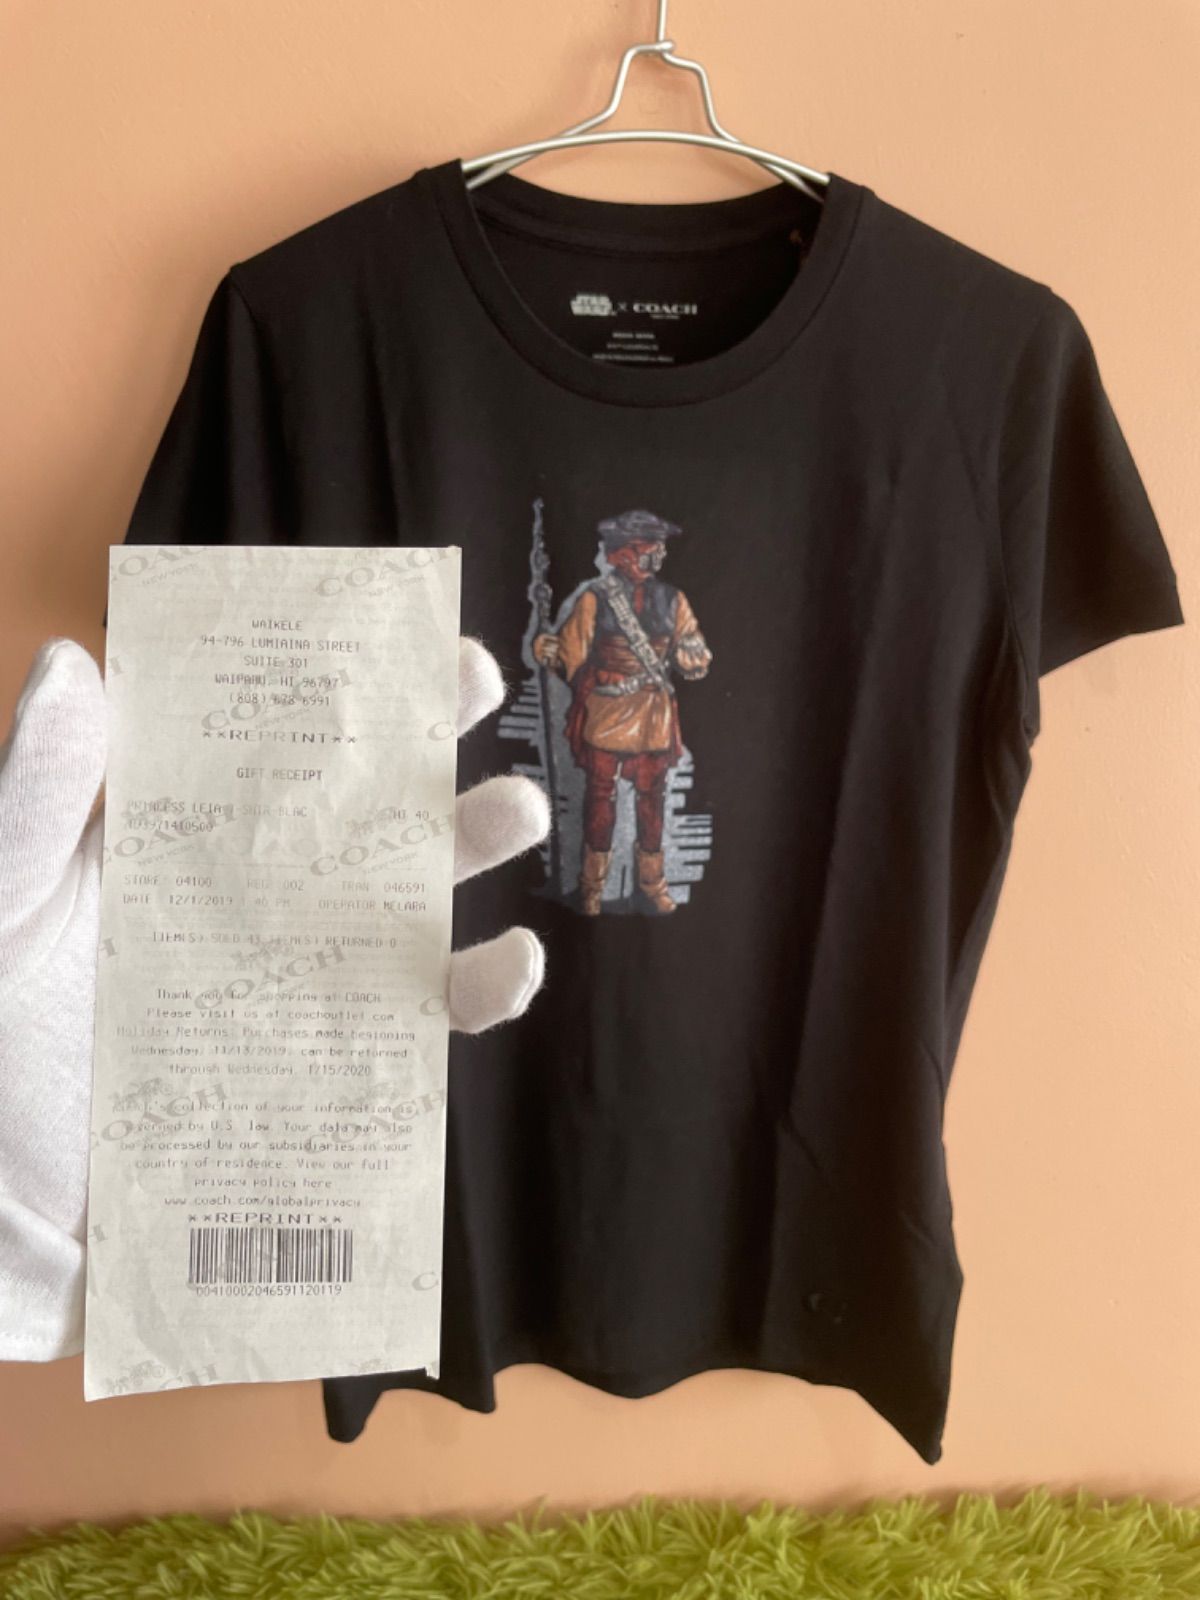 COACH Star Wars 新品　限定　コラボ　Tシャツ　Mサイズ